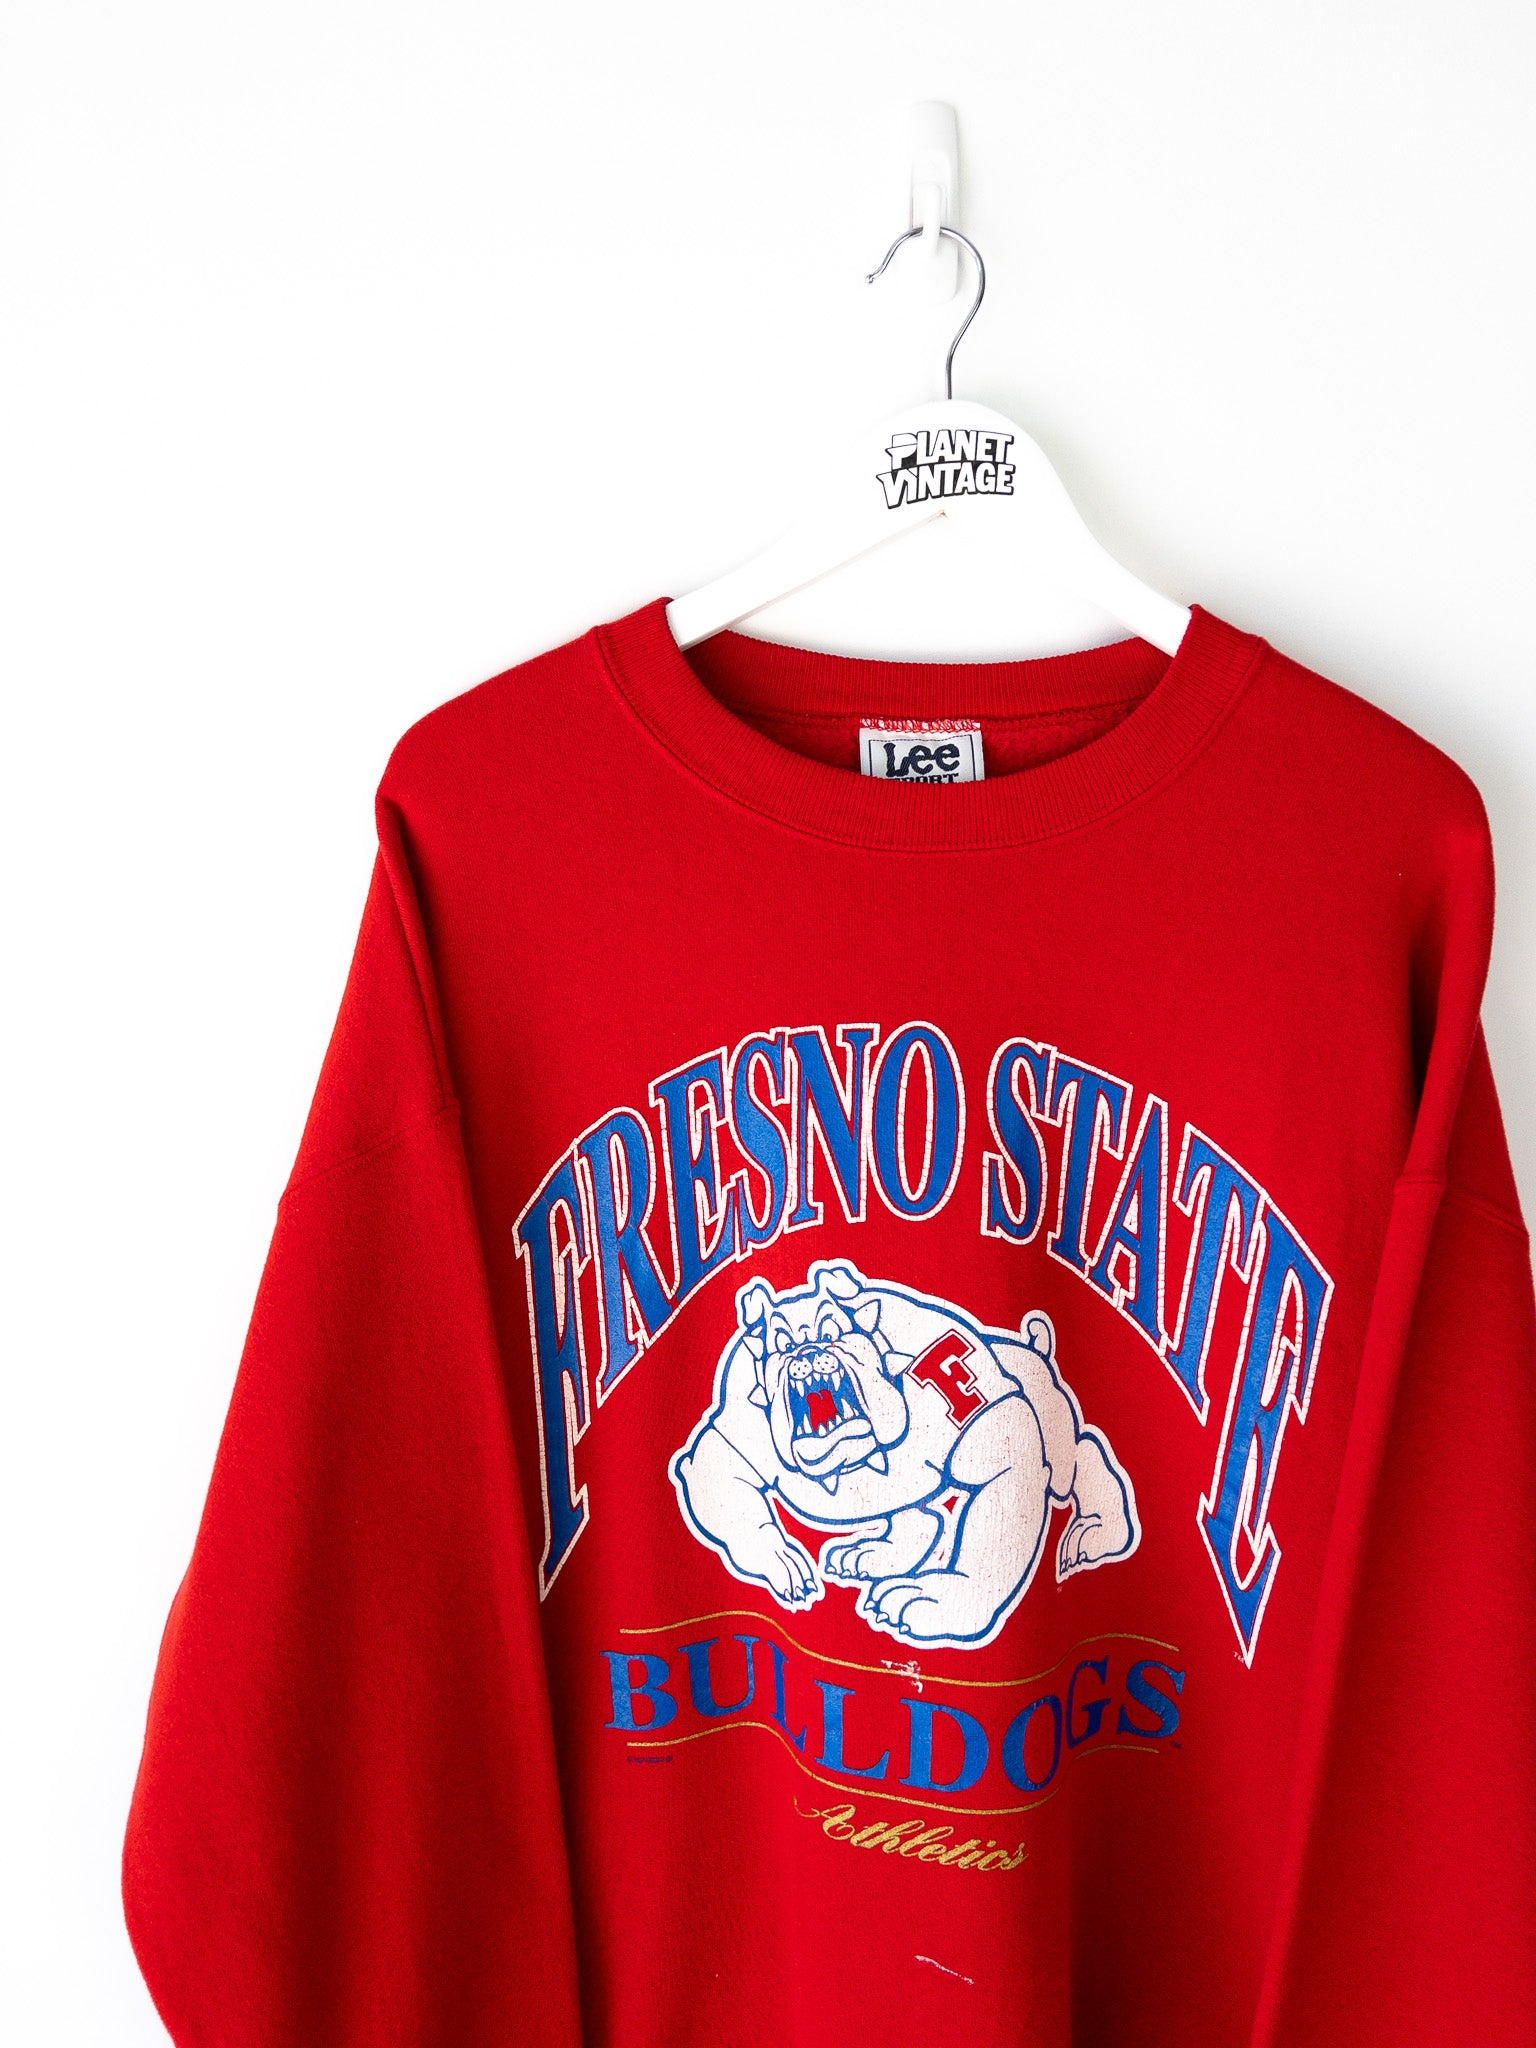 Vintage Fresno State Bulldogs Sweatshirt (XL)